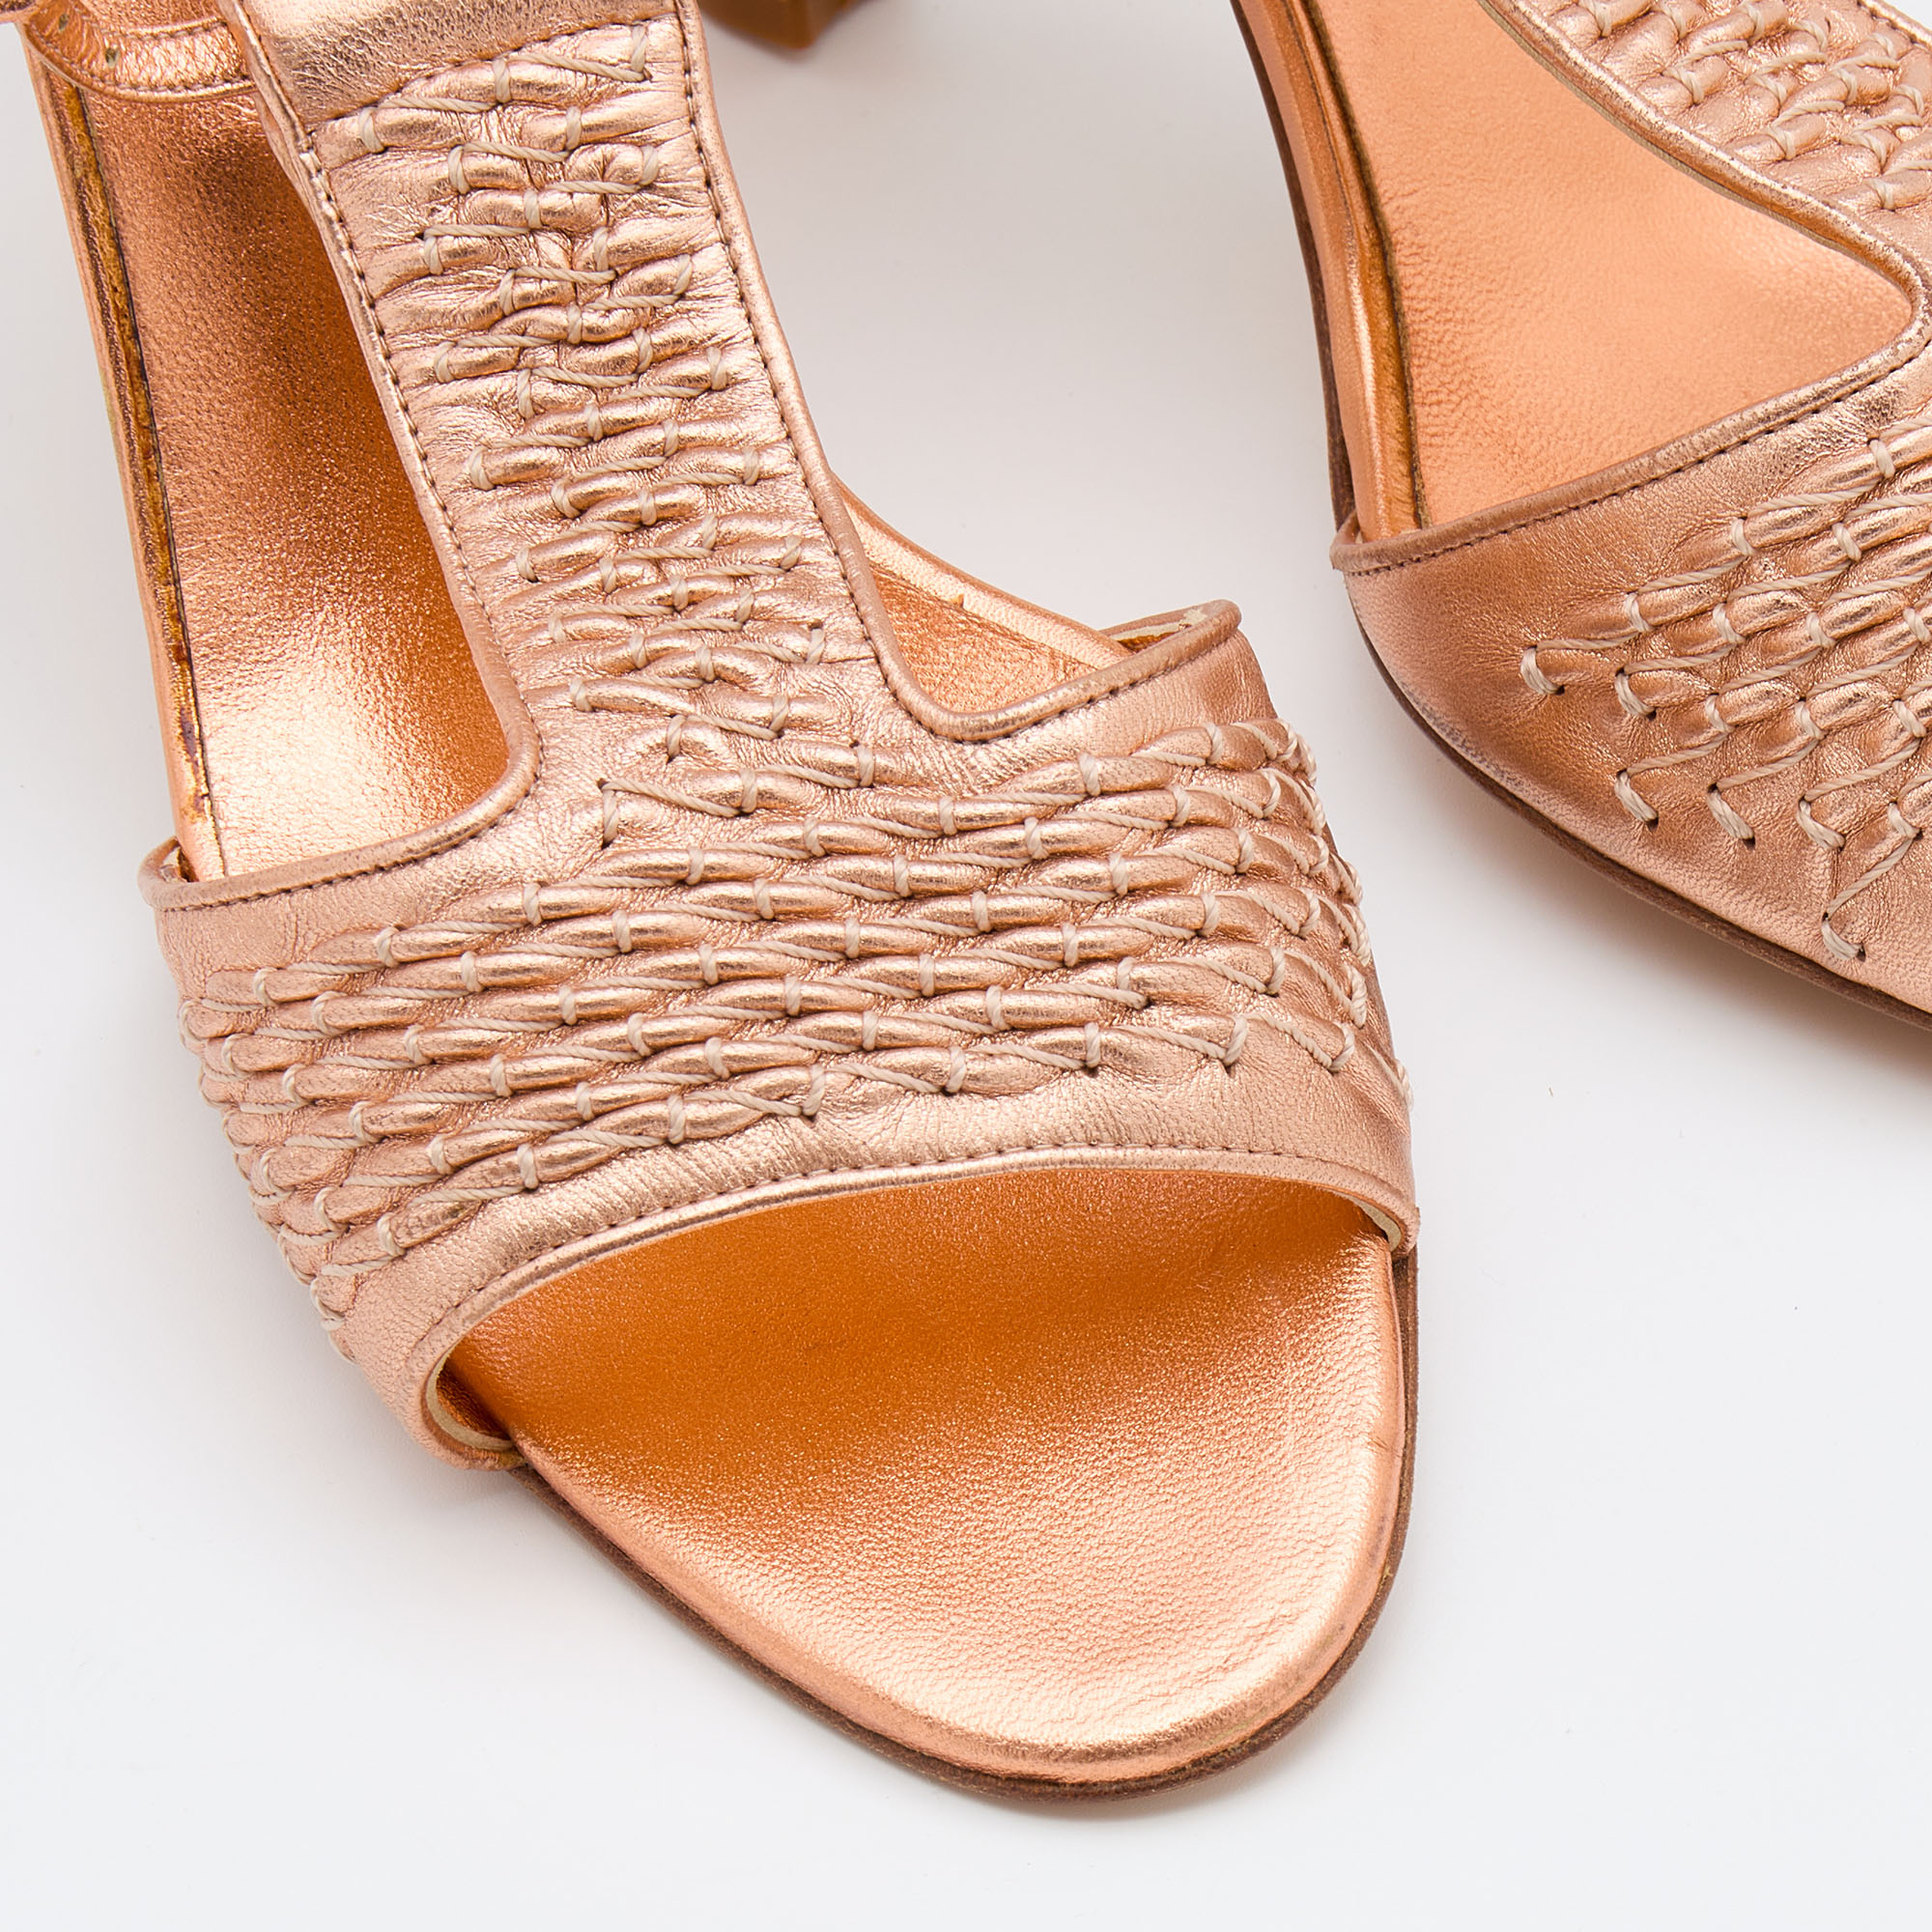 Manolo Blahnik Metallic Bronze Woven Leather T-Strap Sandals Size 41